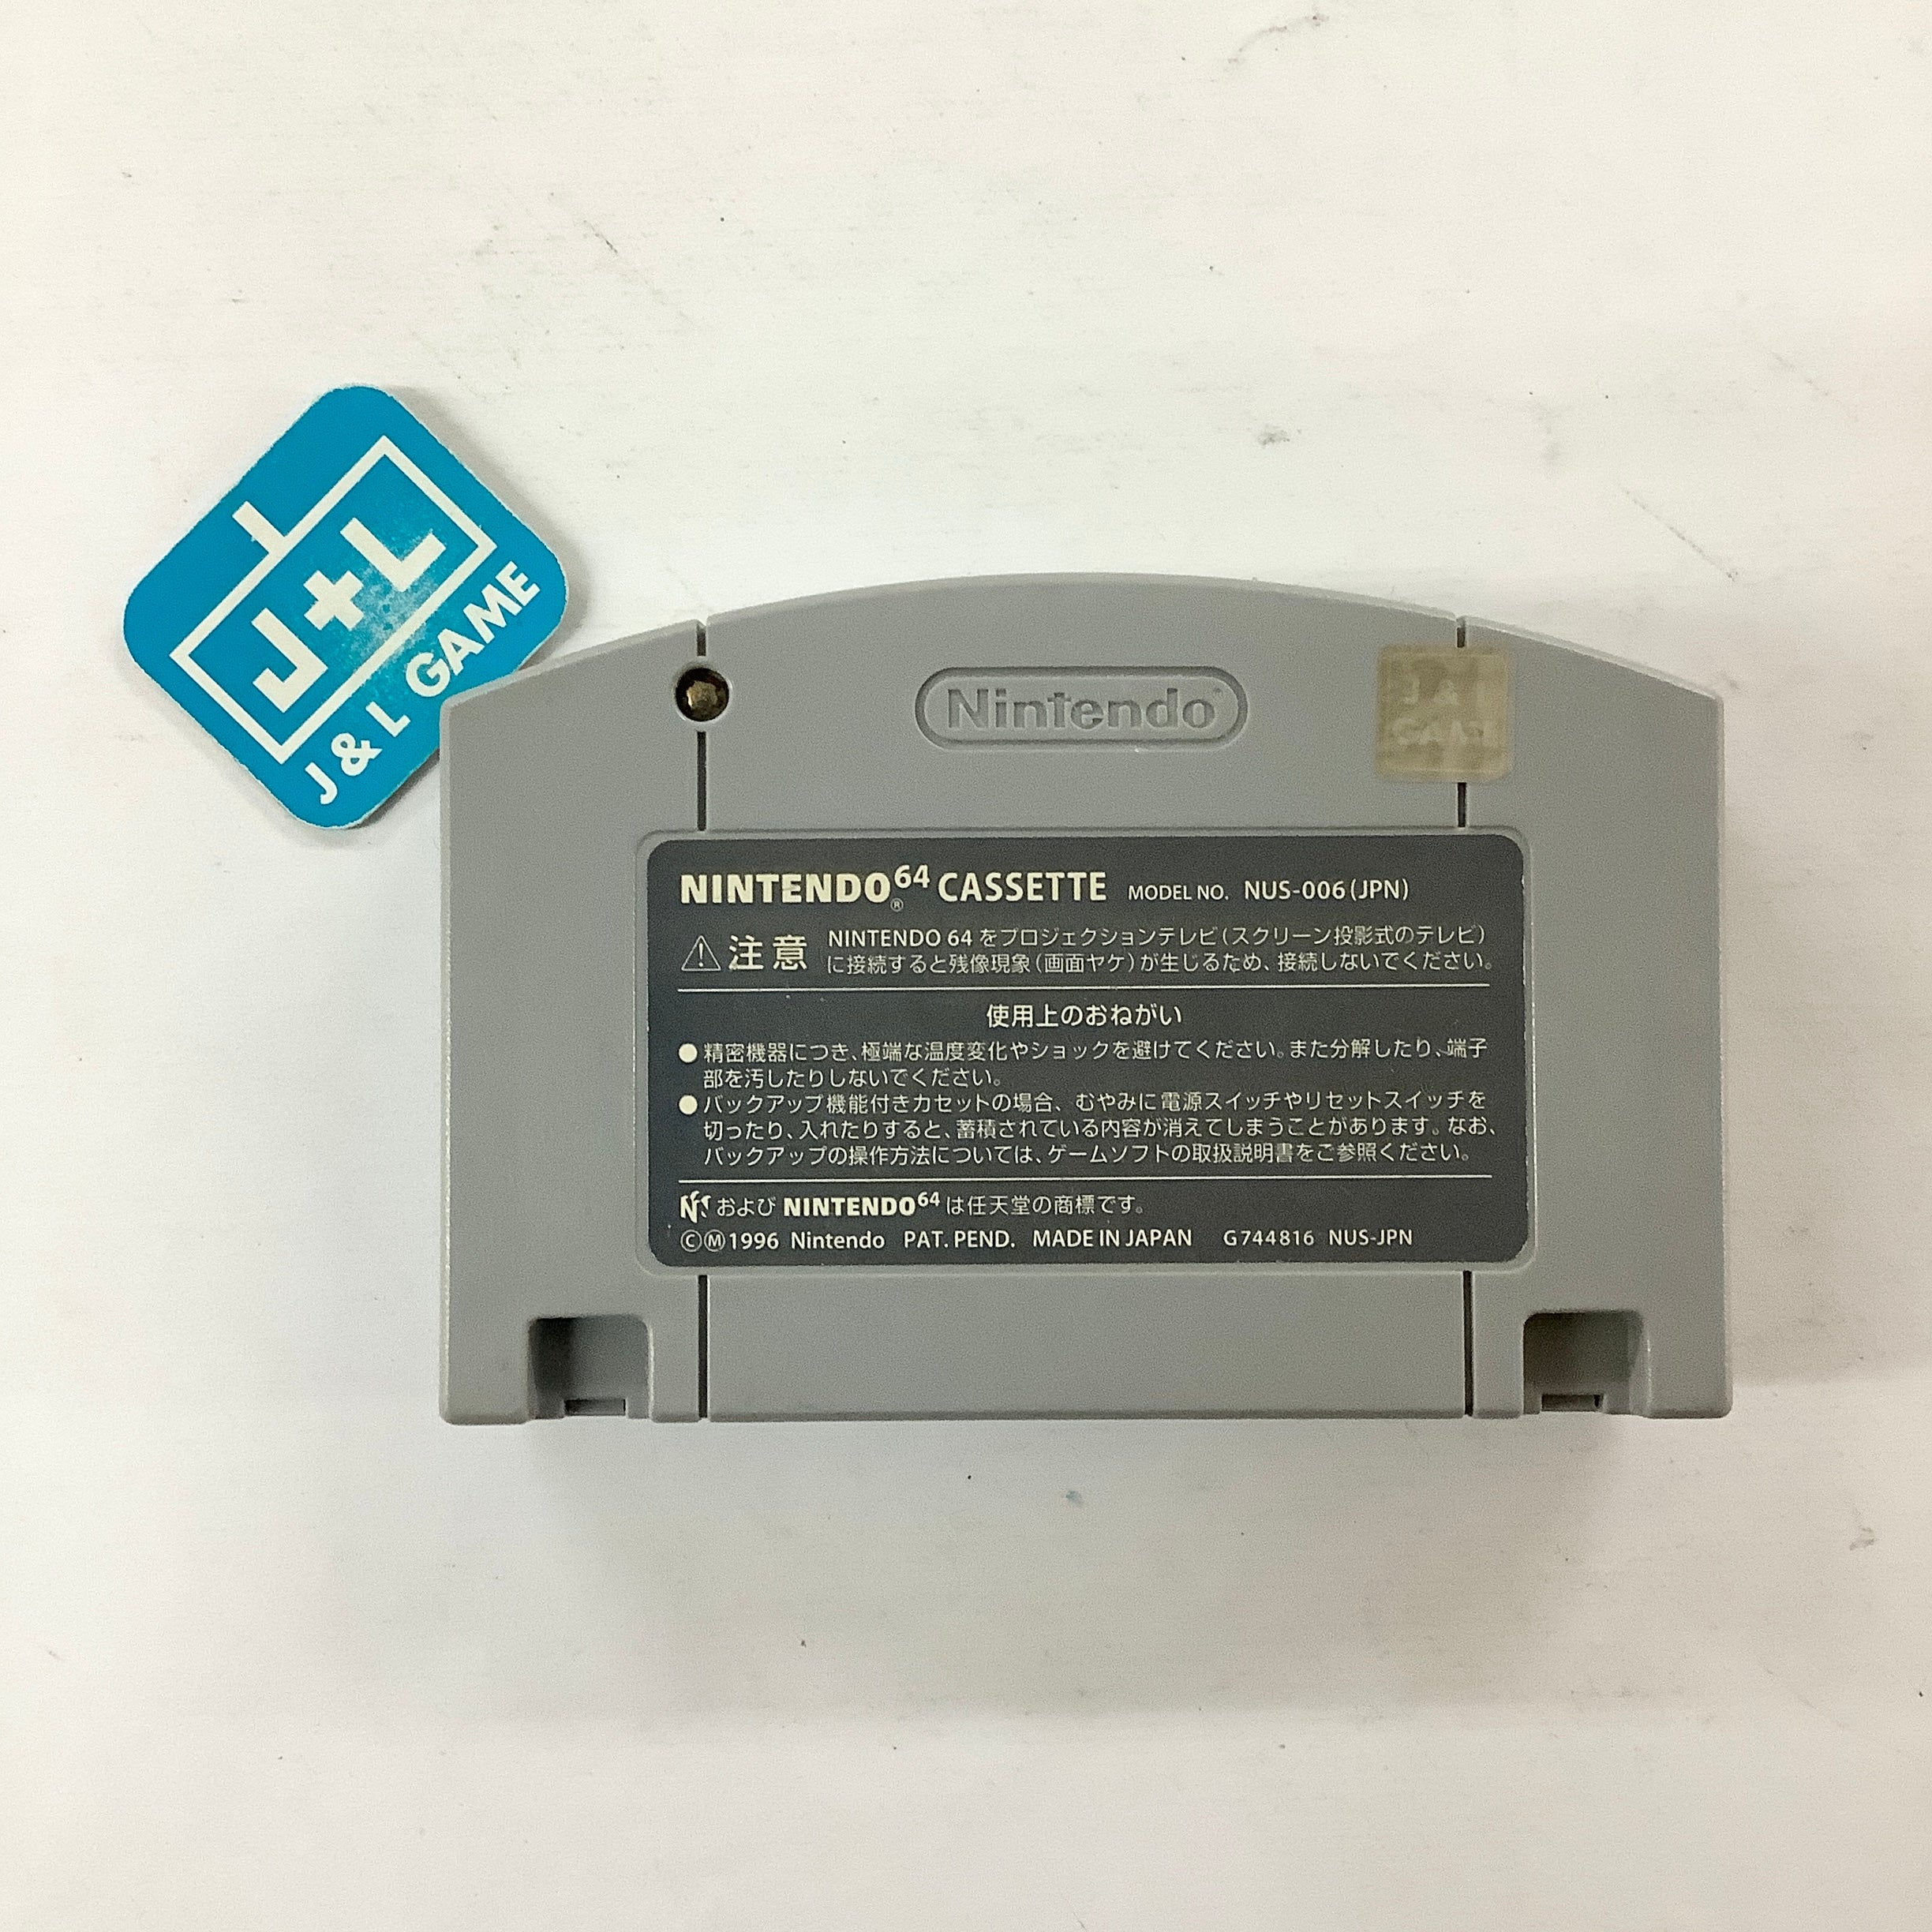 Chou-Kuukan Night Pro Yakyuu King - (N64) Nintendo 64 [Pre-Owned] (Japanese Import) Video Games Imagineer   